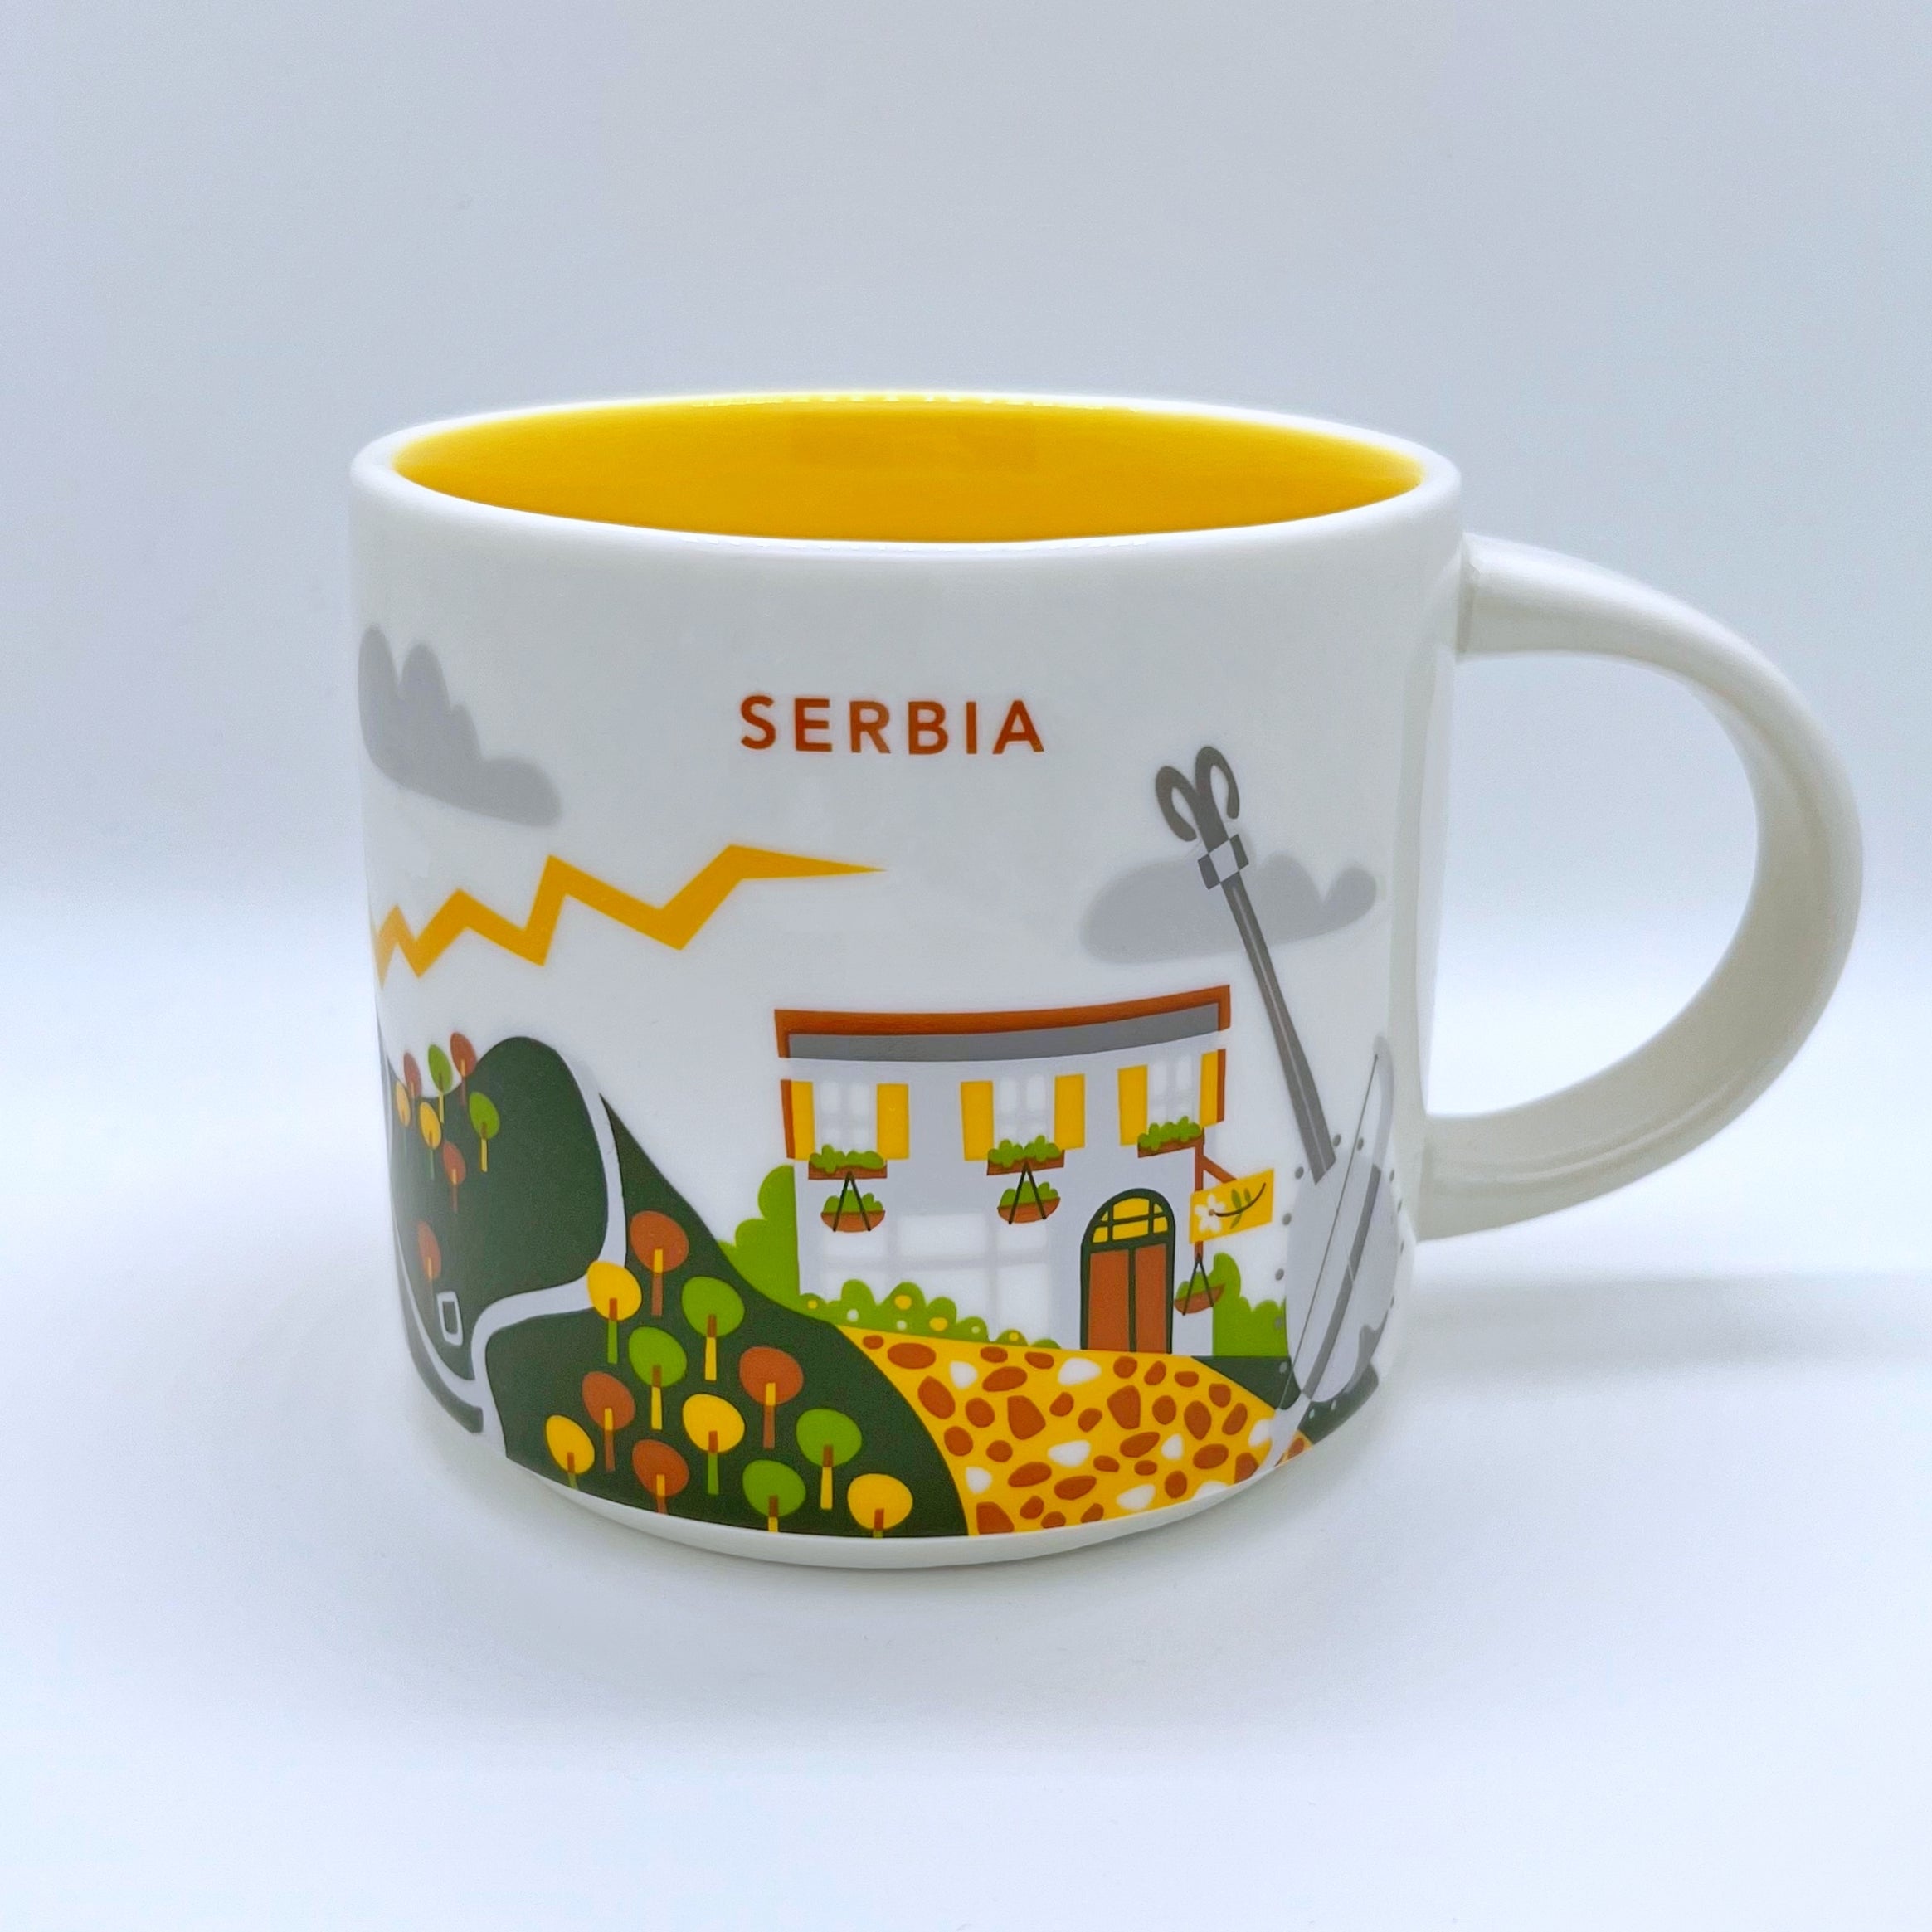 Serbia Country Kaffee Tasse